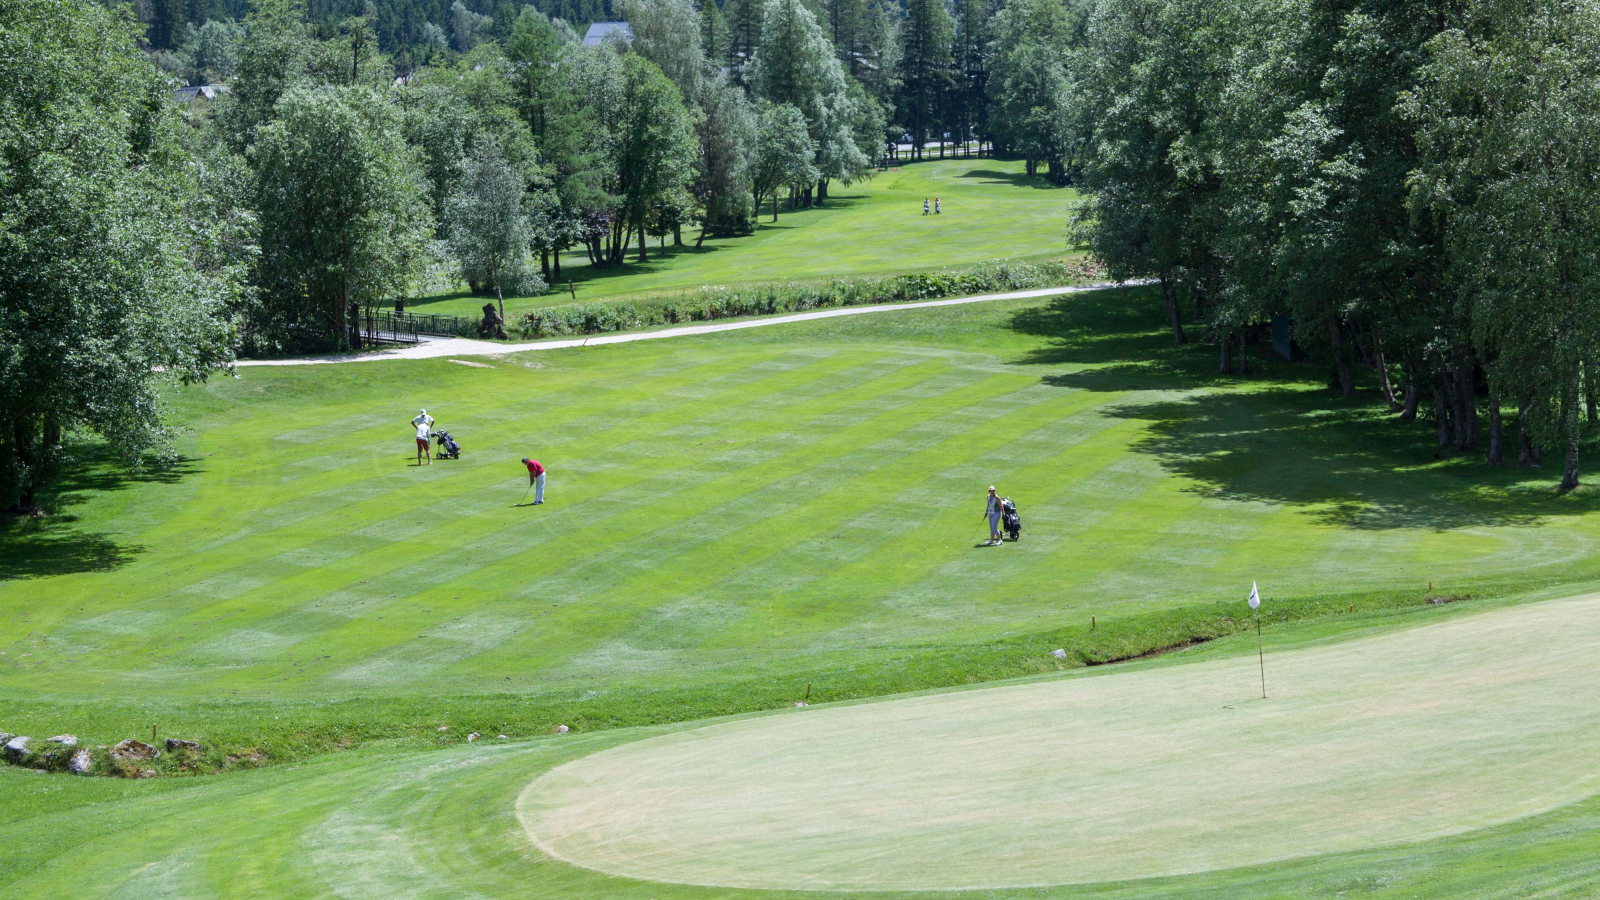 Chamonix golf course 1